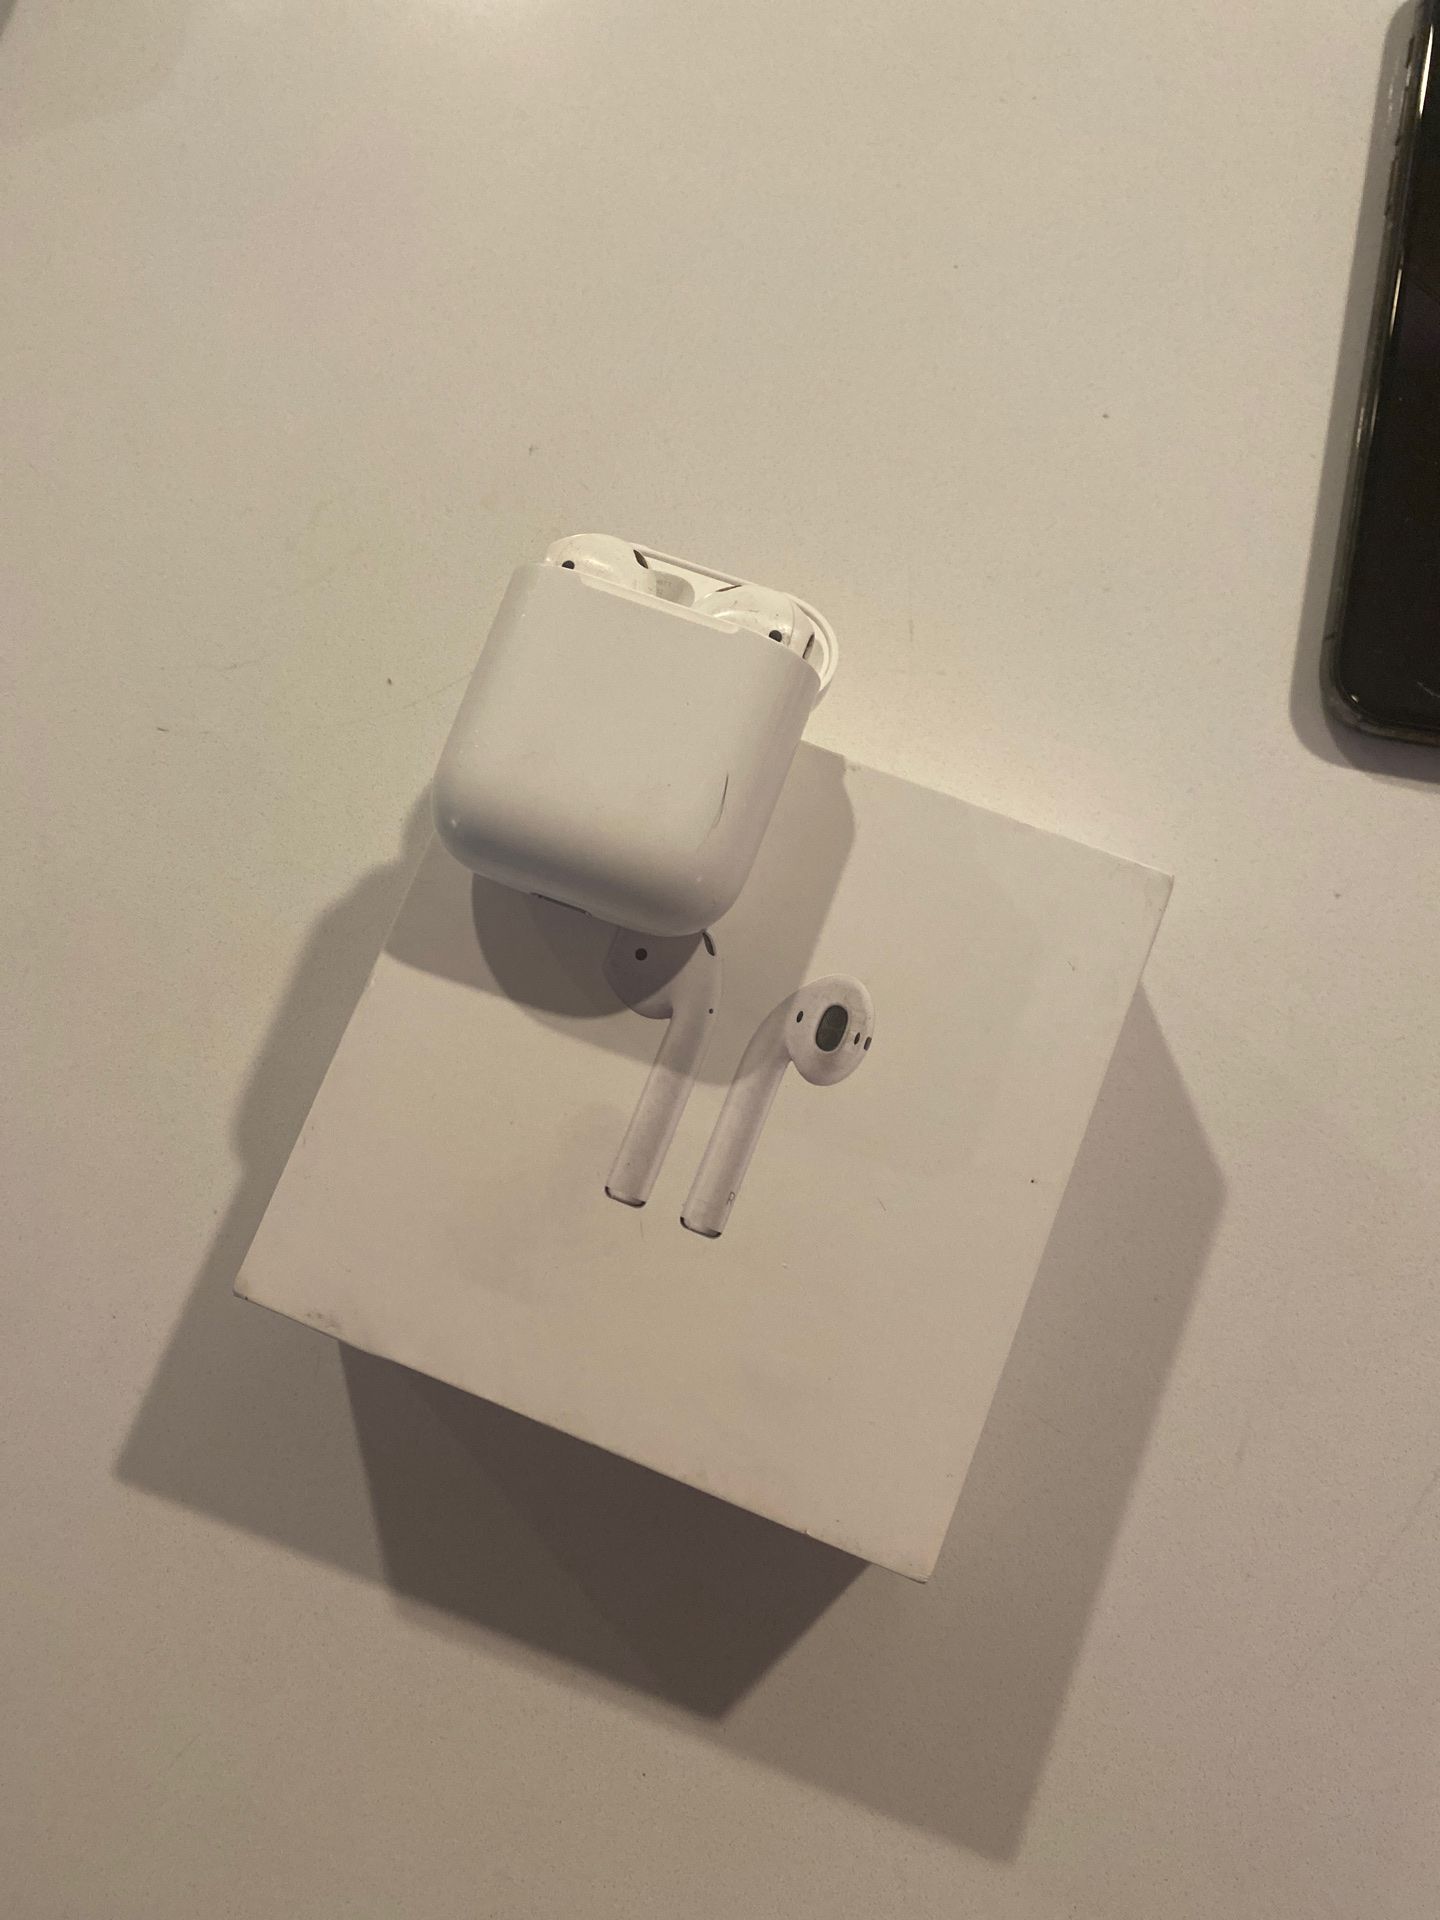 Apple Airpods headphones Bluetooth w box